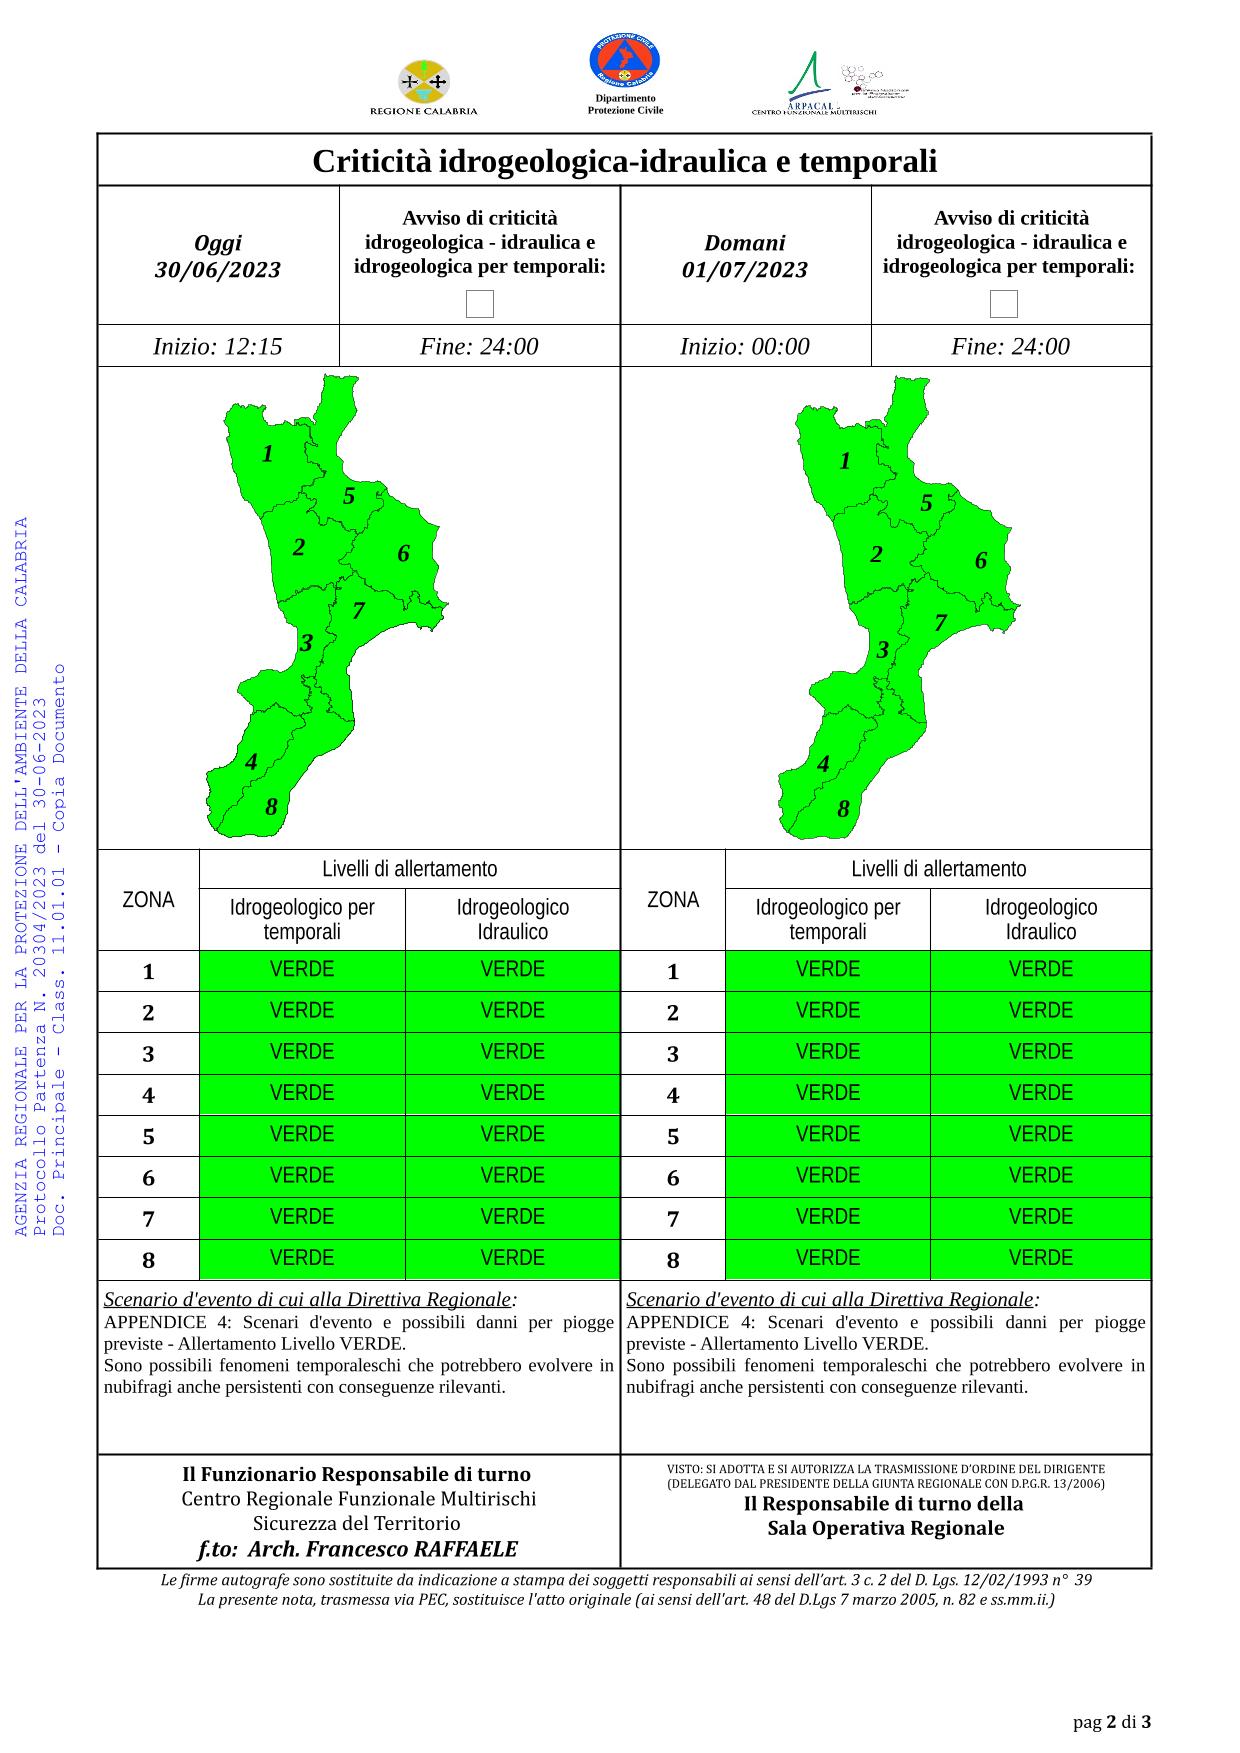 Criticità idrogeologica-idraulica e temporali in Calabria 30-06-2023